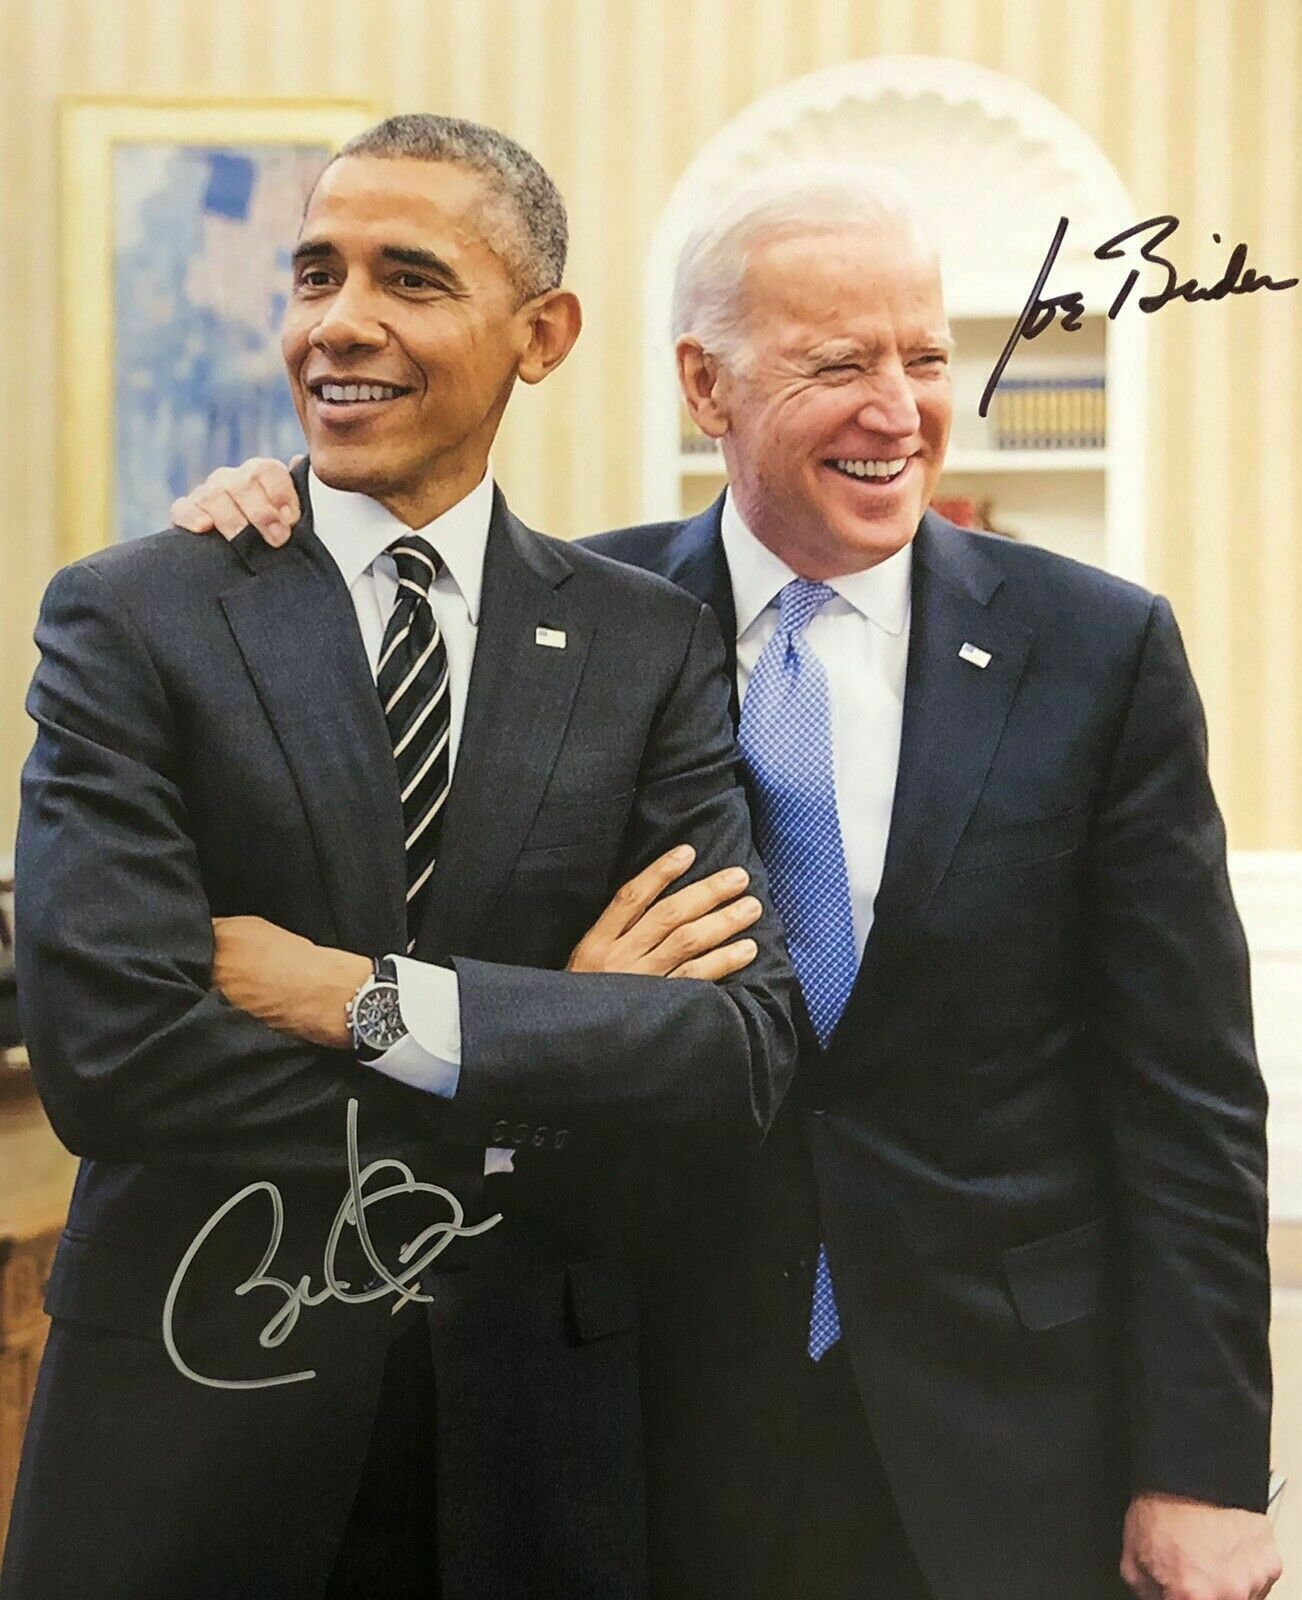 Barack Obama / Joe Biden Autographed Signed 8x10 Photo Reprint